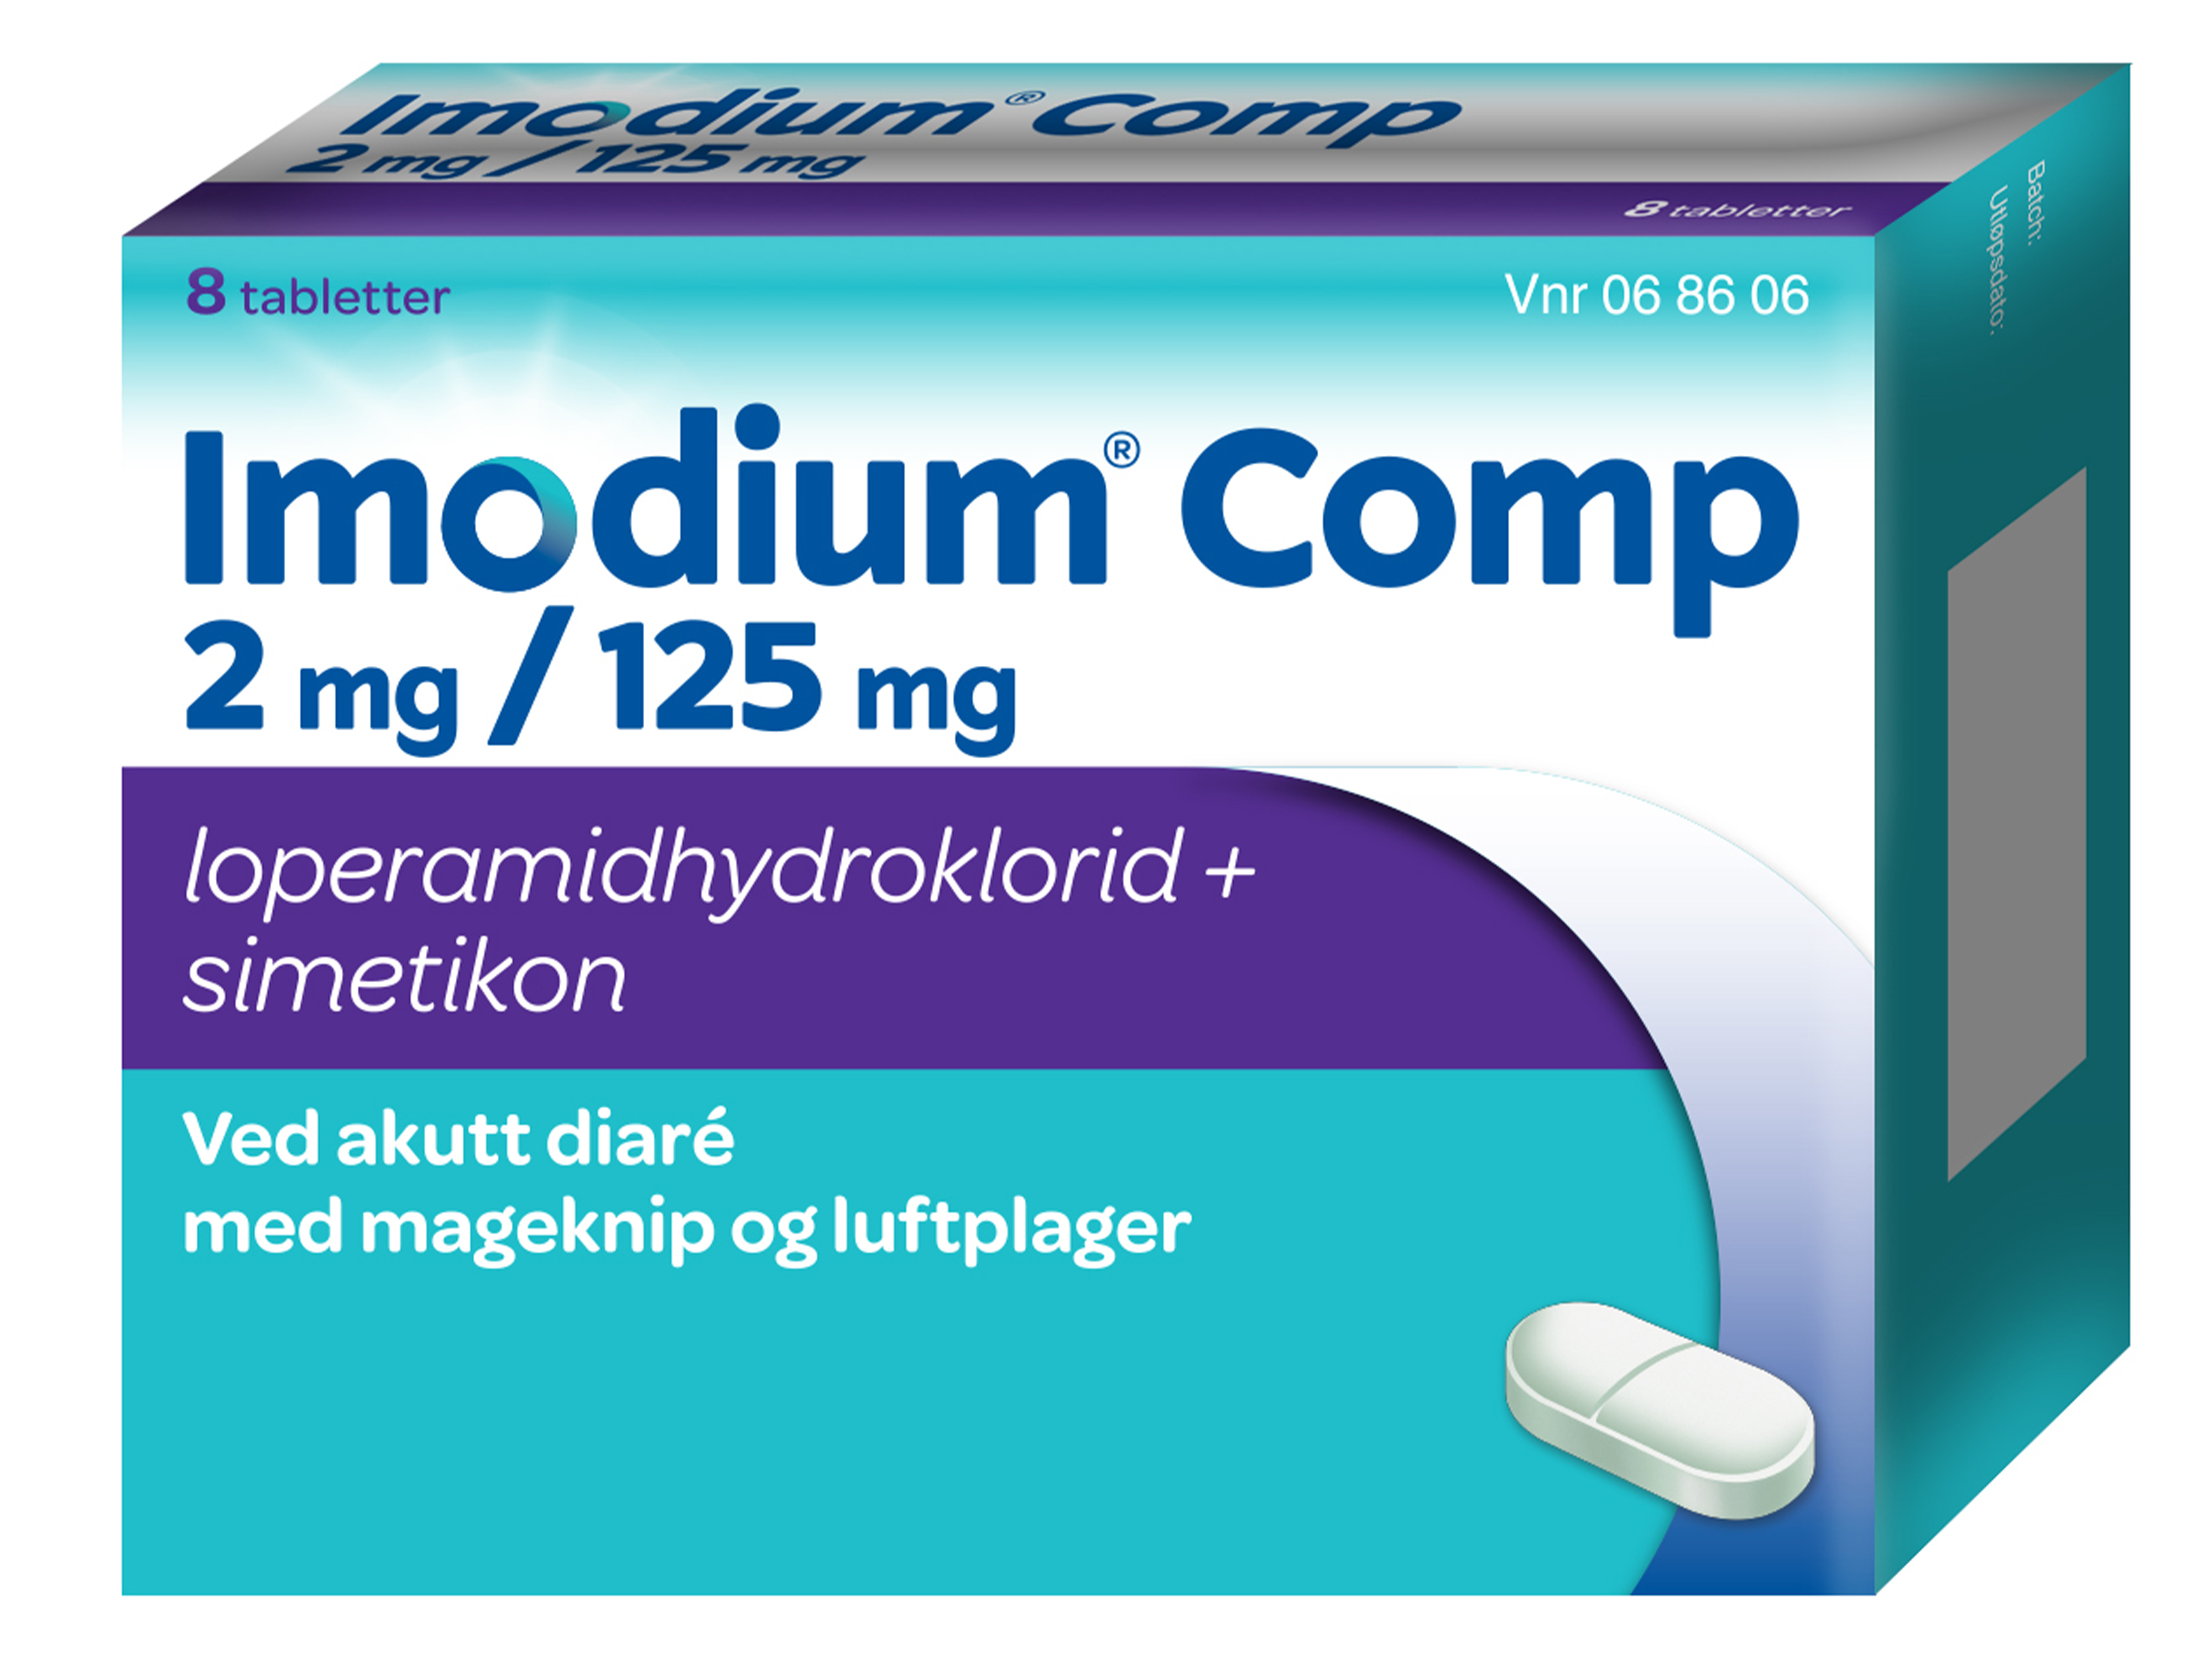 Imodium Imodium Comp tabletter 2mg/125mg, 8 stk. på brett